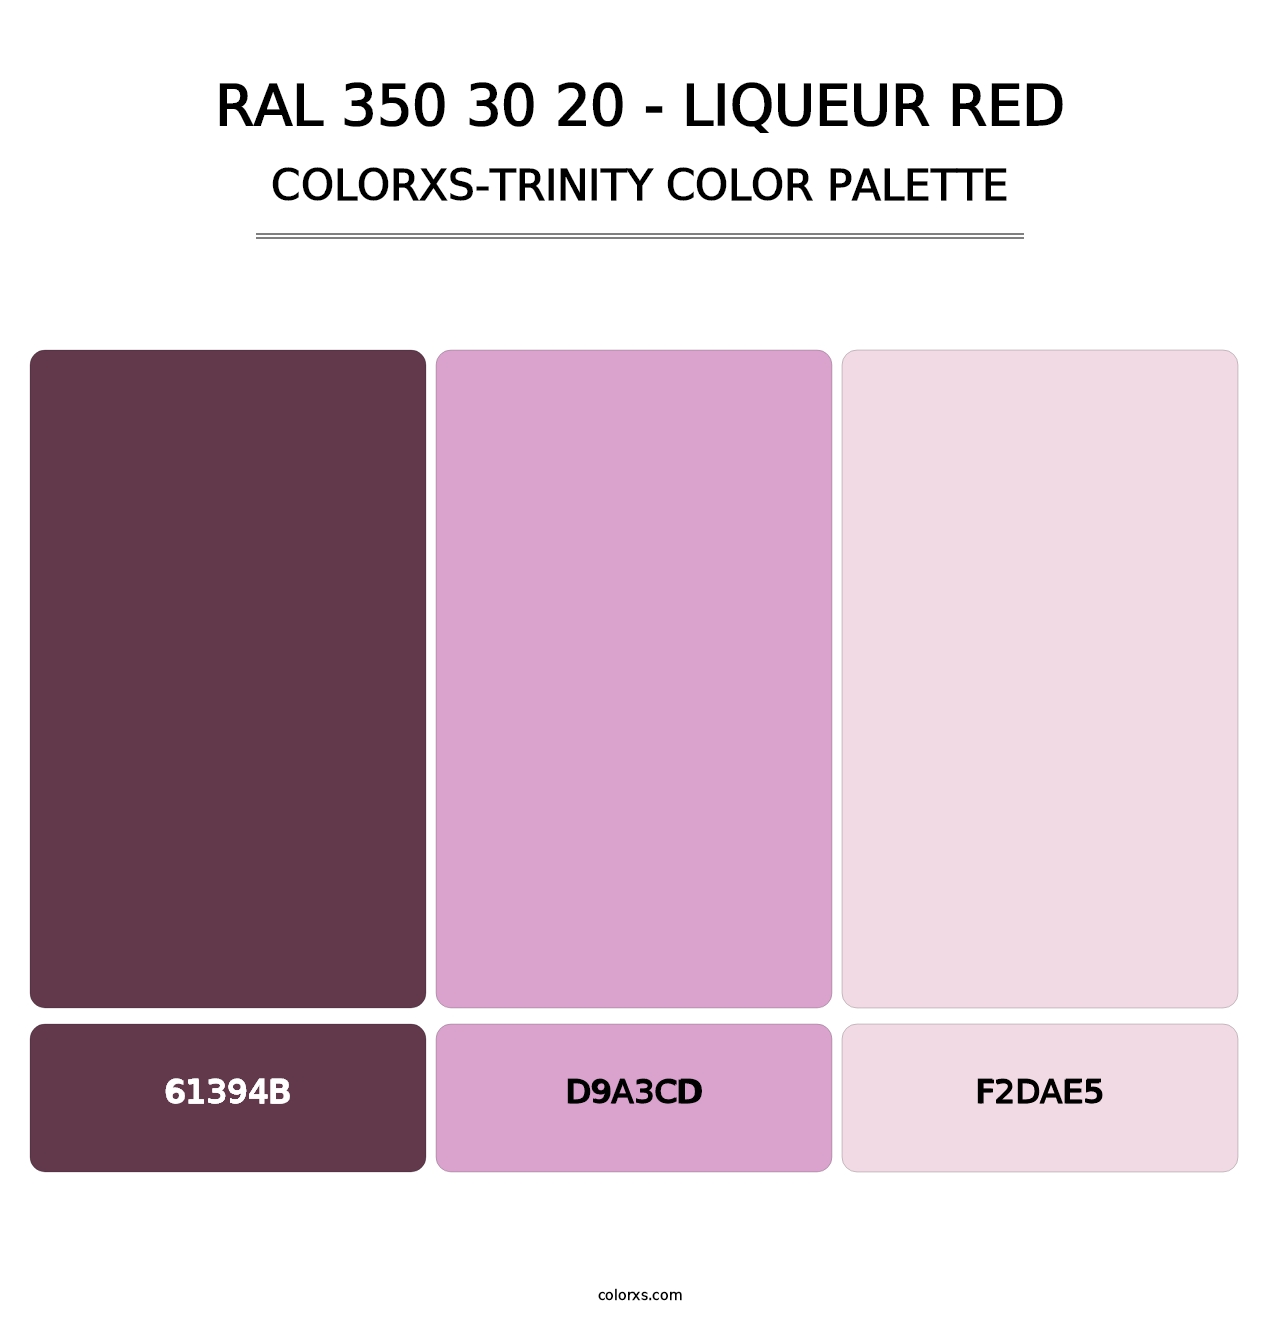 RAL 350 30 20 - Liqueur Red - Colorxs Trinity Palette